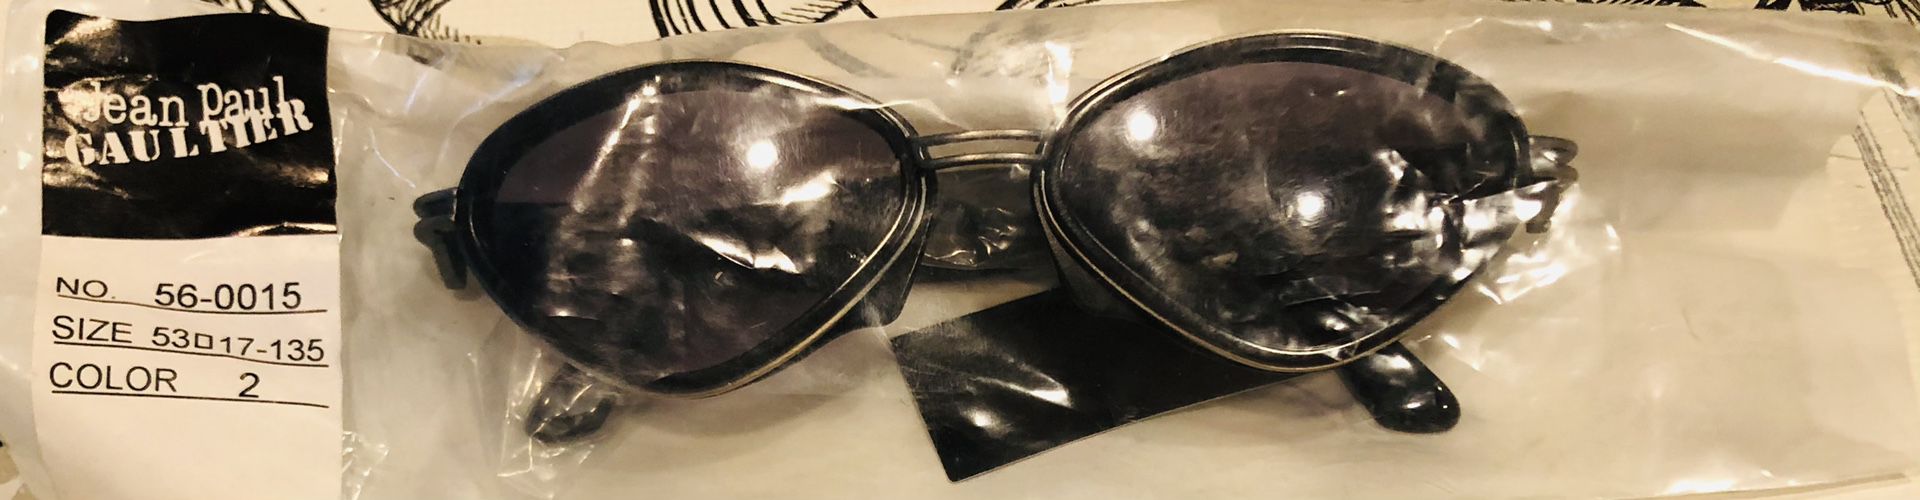 Jean Paul Gaultier Vintage Sunglasses  for Sale in